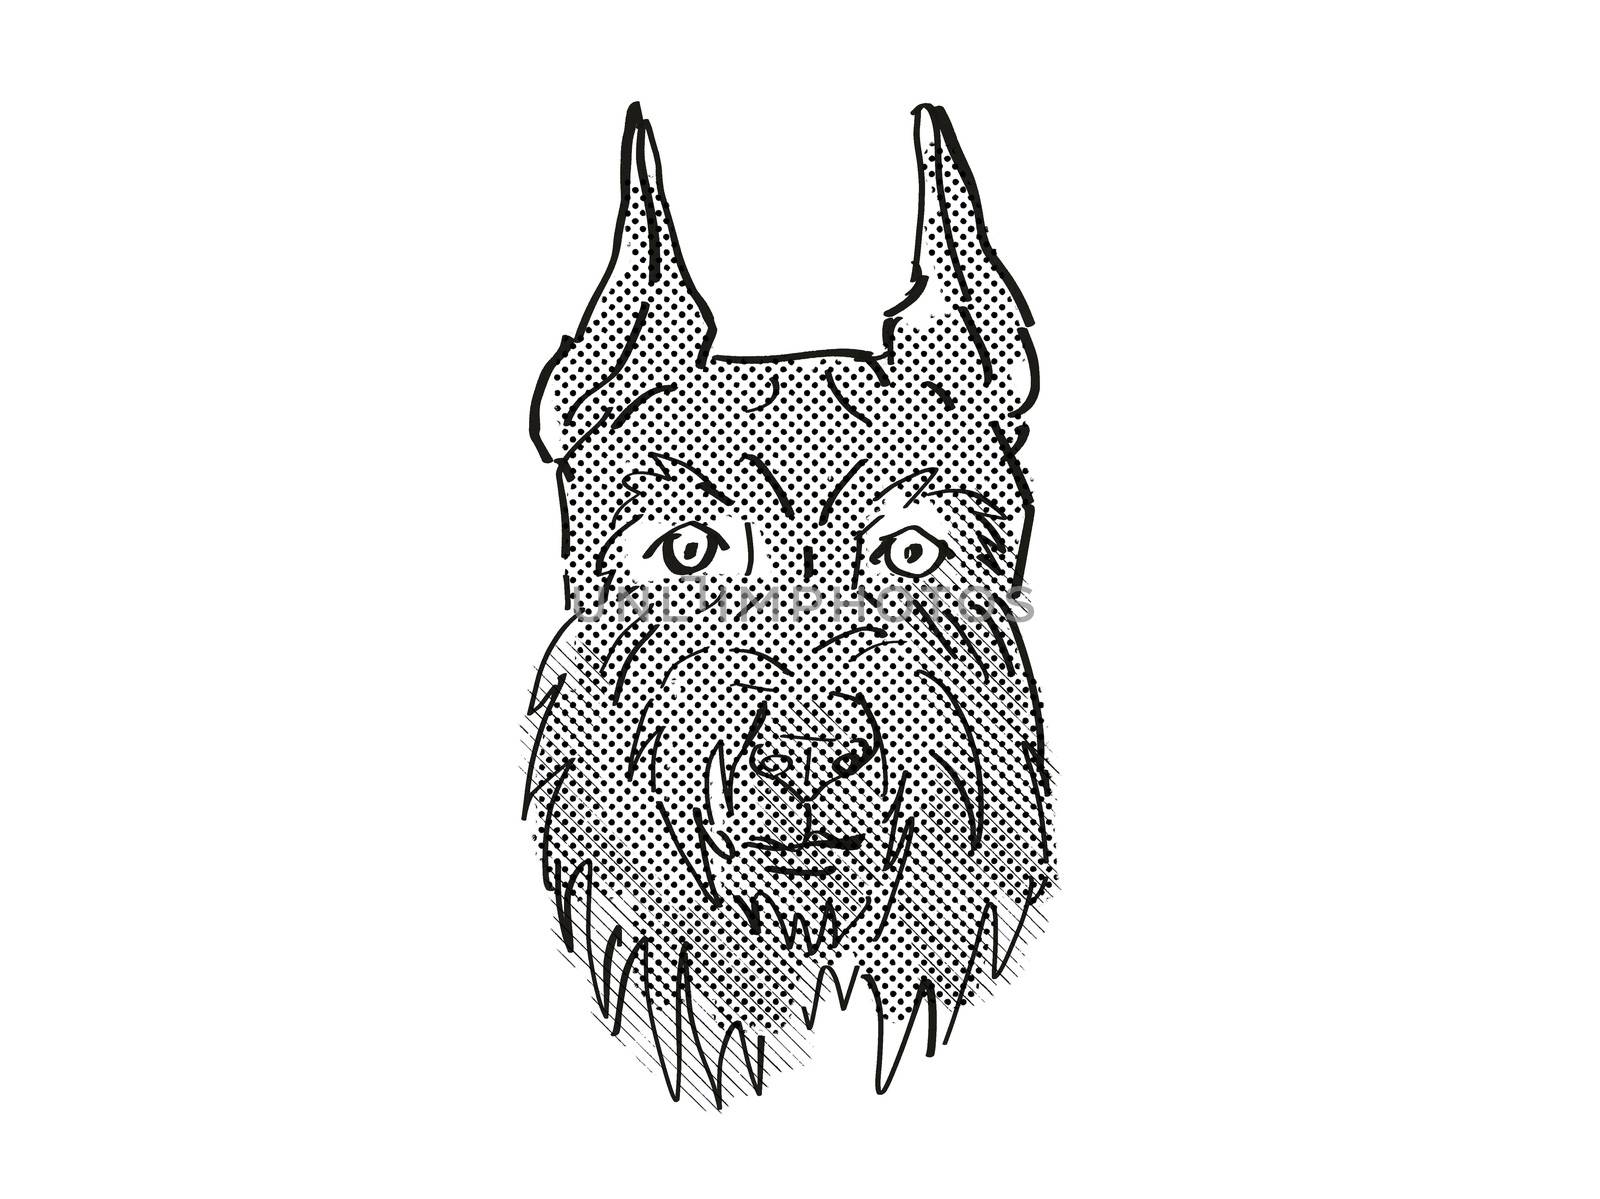 Giant Schnauzer Dog Breed Cartoon Retro Drawing by patrimonio